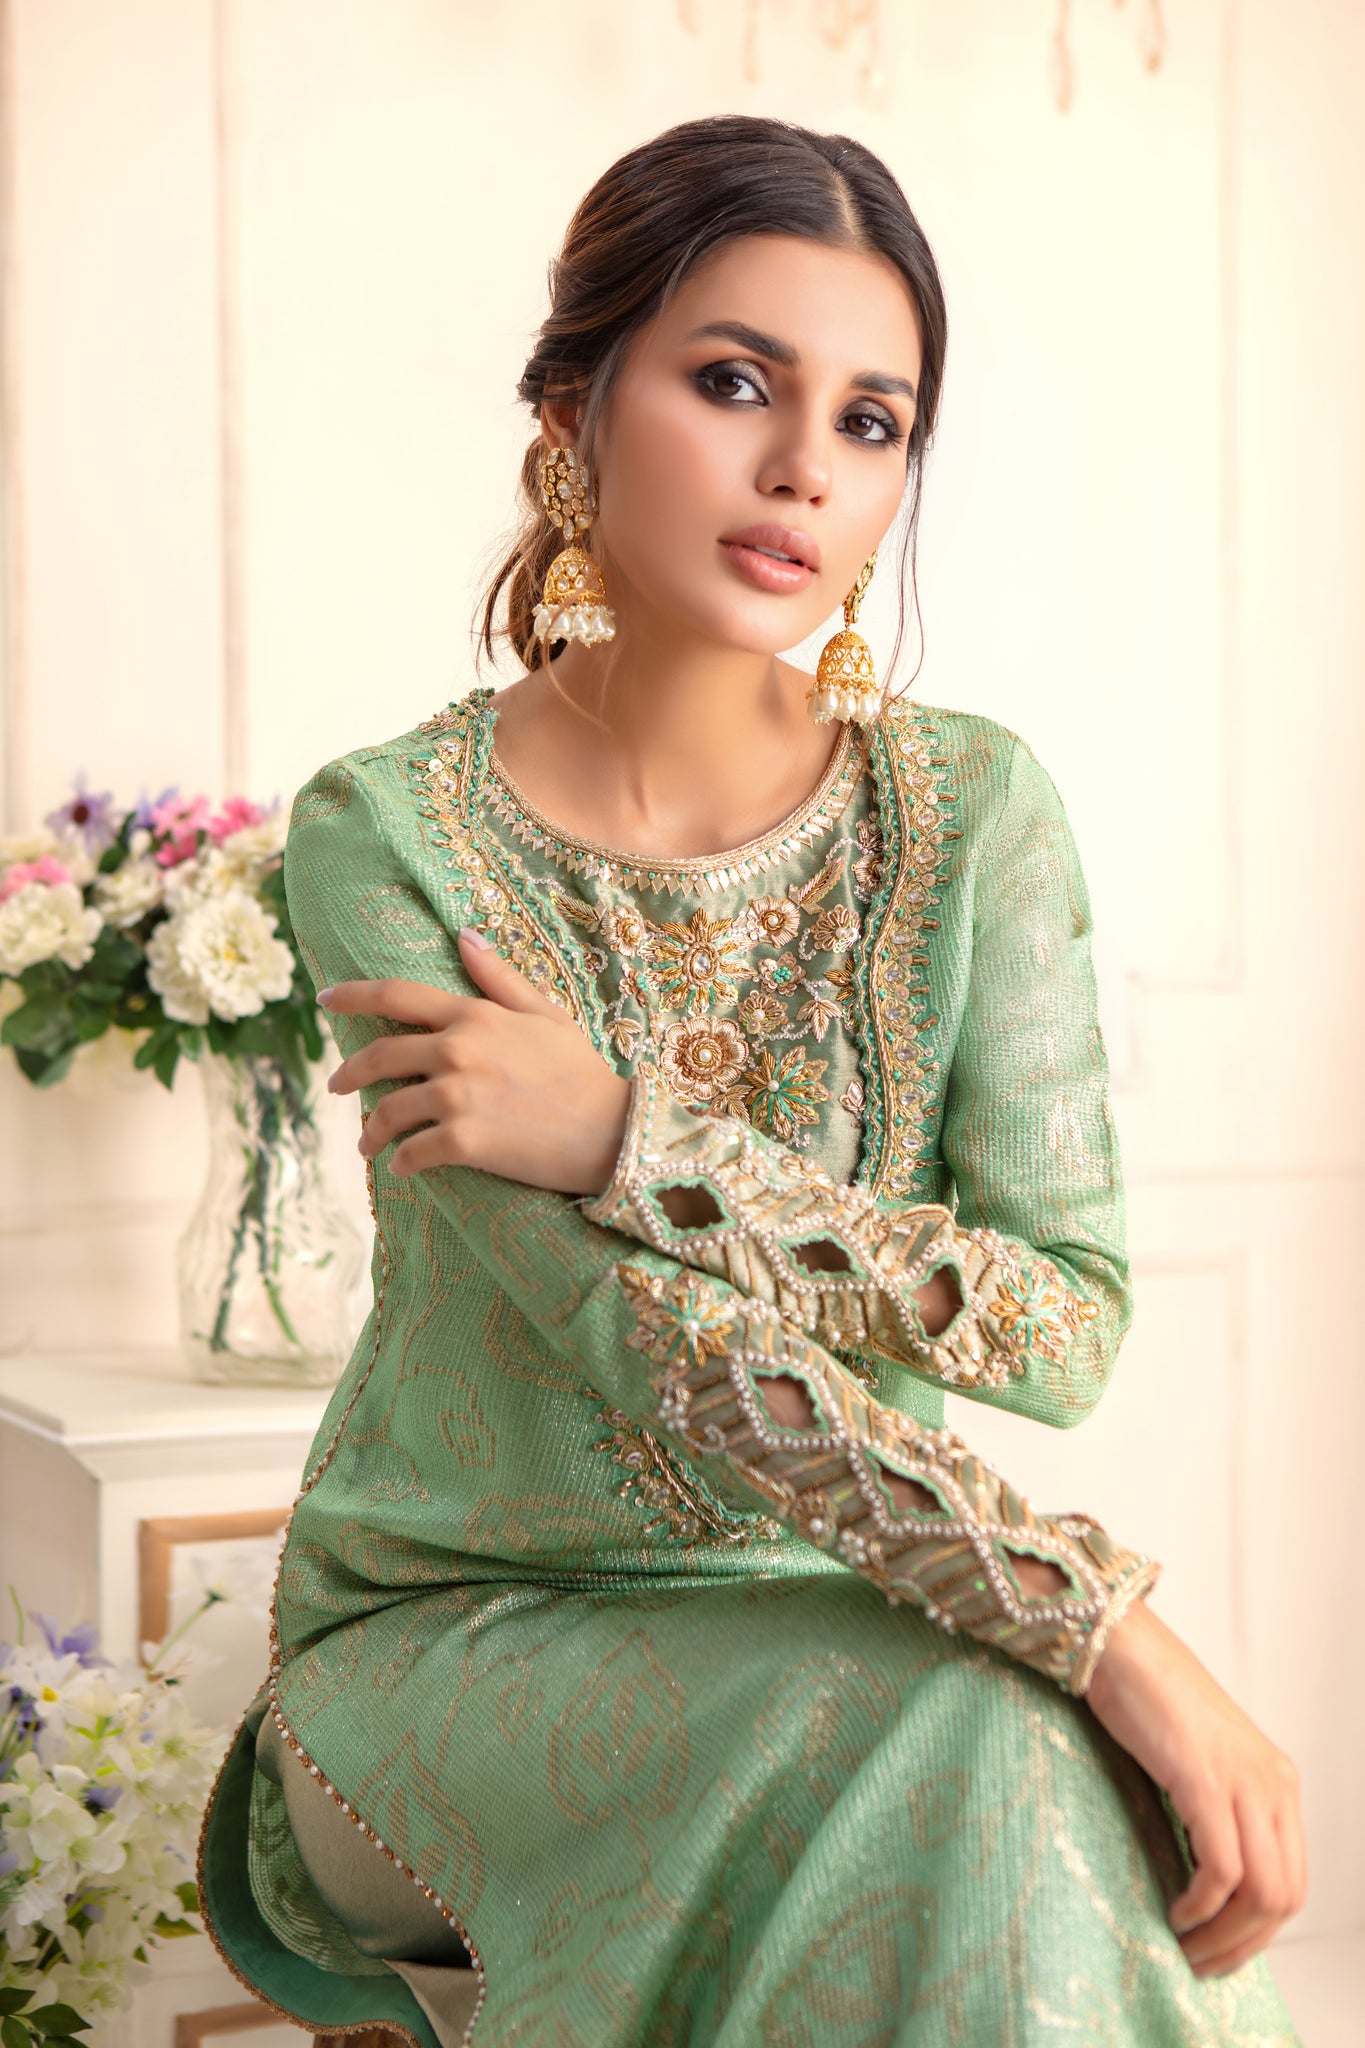 Dimah | Pakistani Designer Outfit | Sarosh Salman